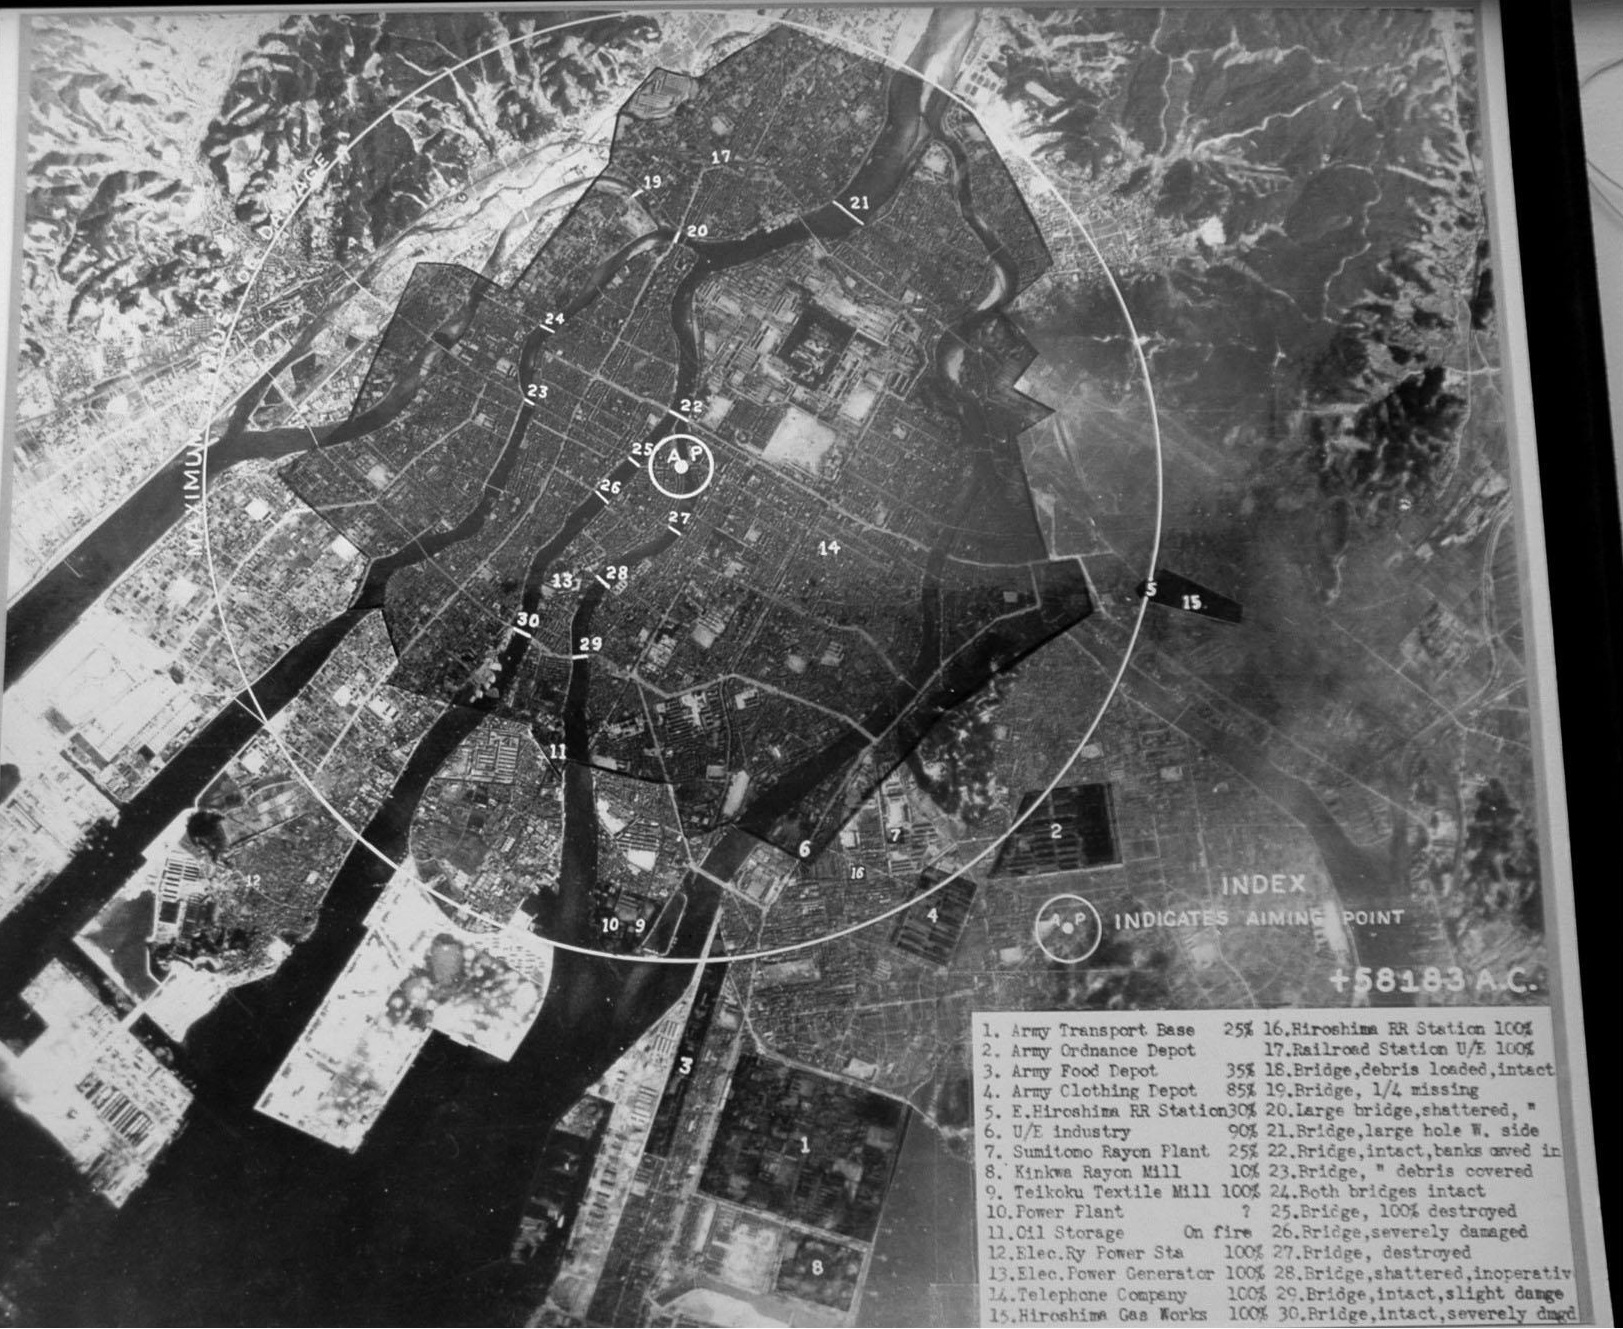 Stimson Center offers A-bomb damage assessment photos to Hiroshima ...